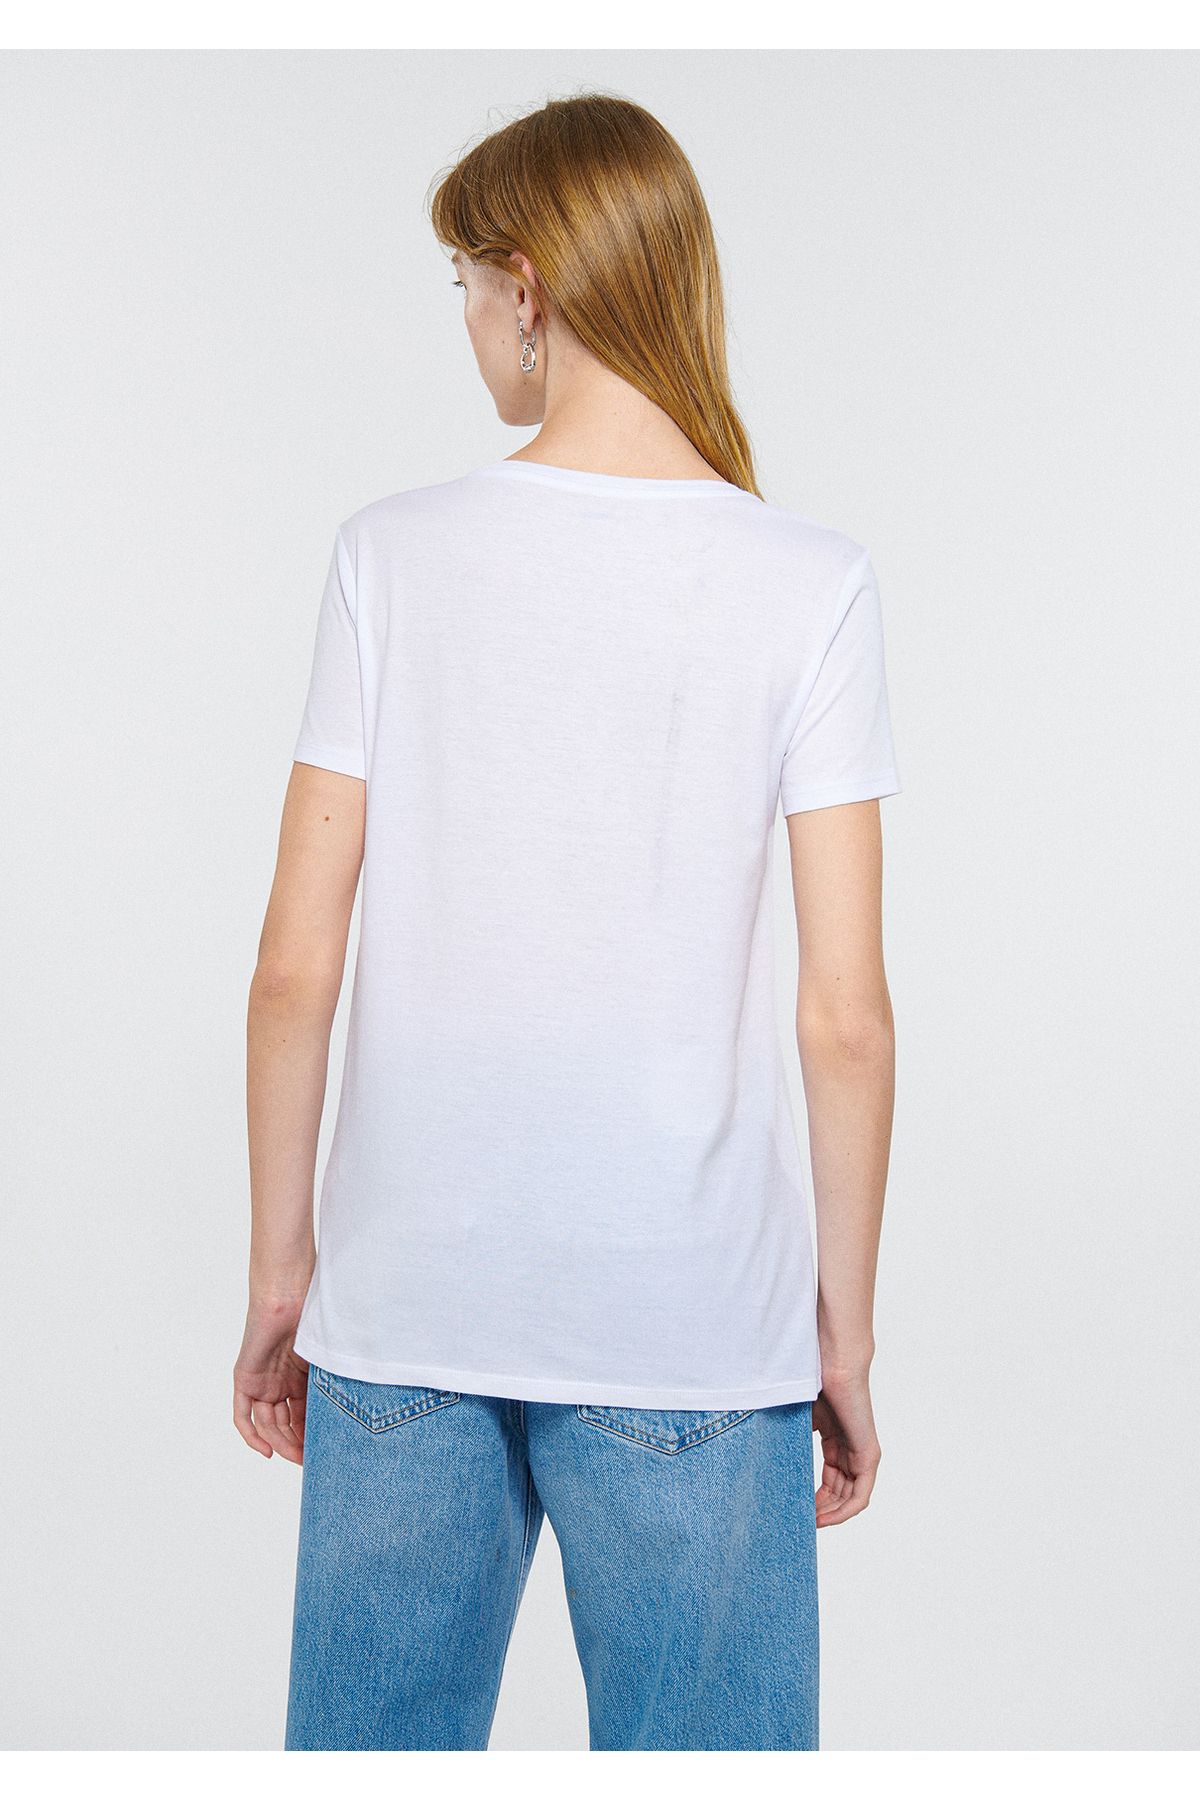 Mavi تی شرت سفید چاپ شده شانس با تناسب معمولی / برش 1611297-620